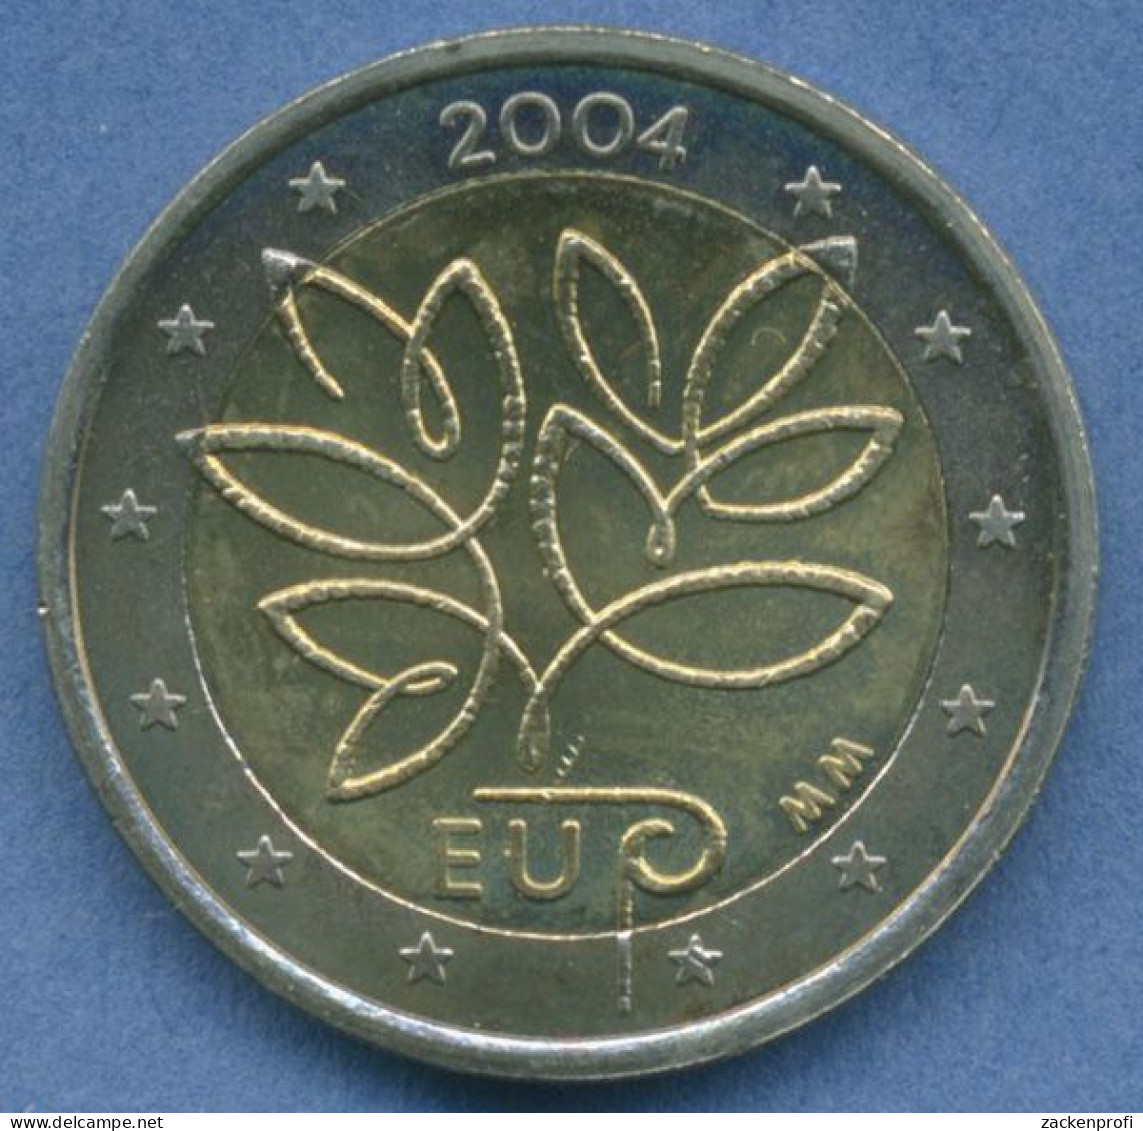 Finnland 2 Euro 2004 EU-Erweiterung, Lose In Kapsel, St (m1486) - Finland